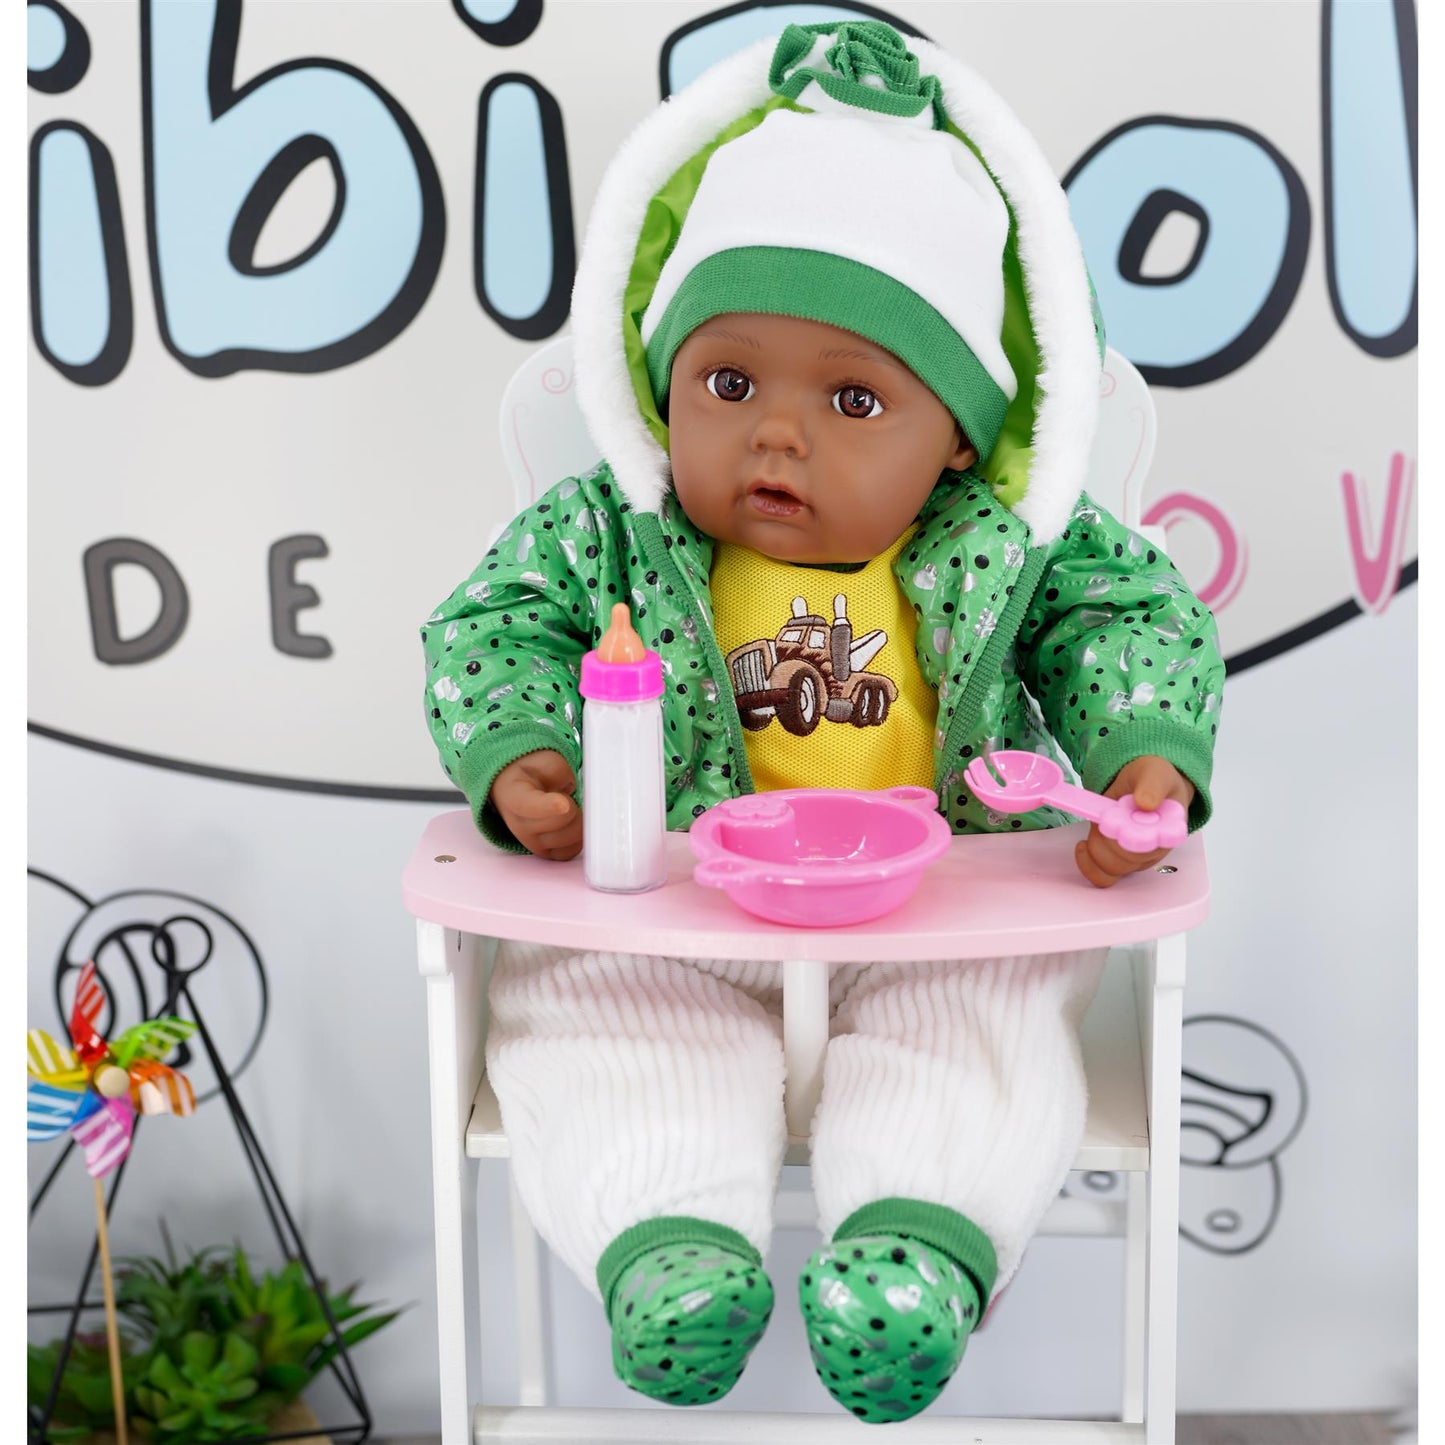 BiBi Black Baby Doll "Grean Pea" (50 cm / 20") by BiBi Doll - UKBuyZone